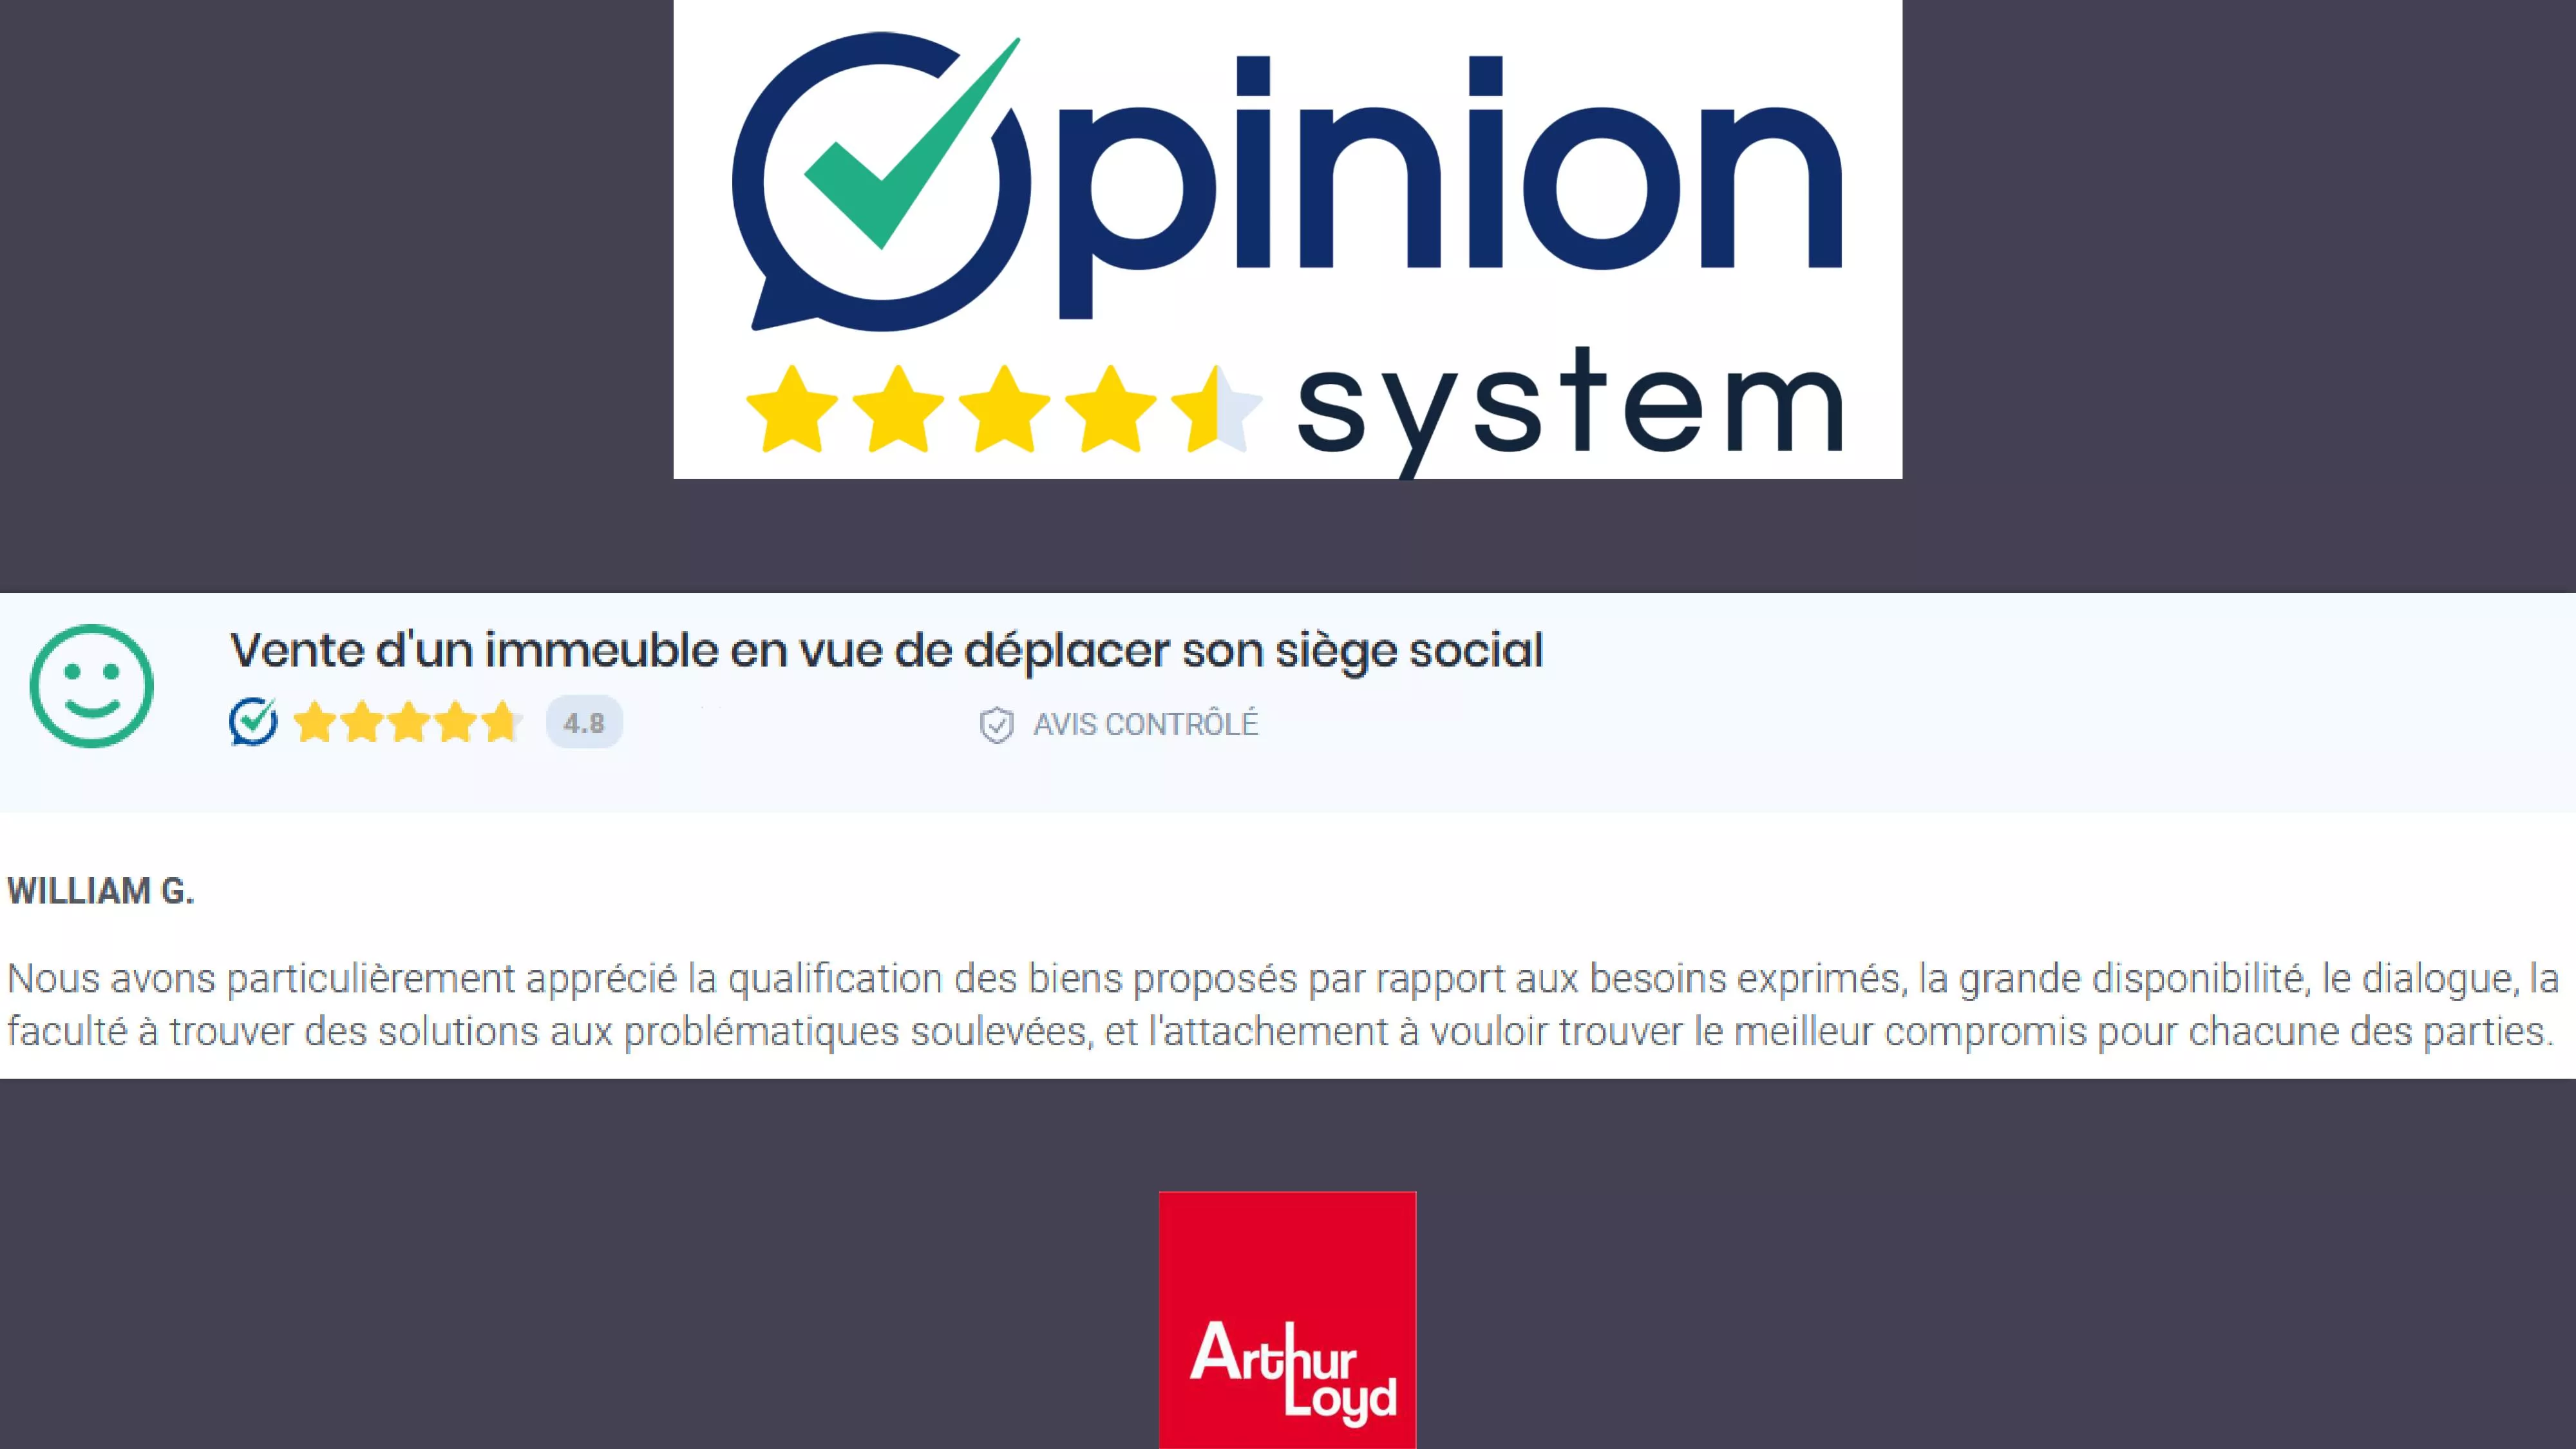 Opinion System AL Caen